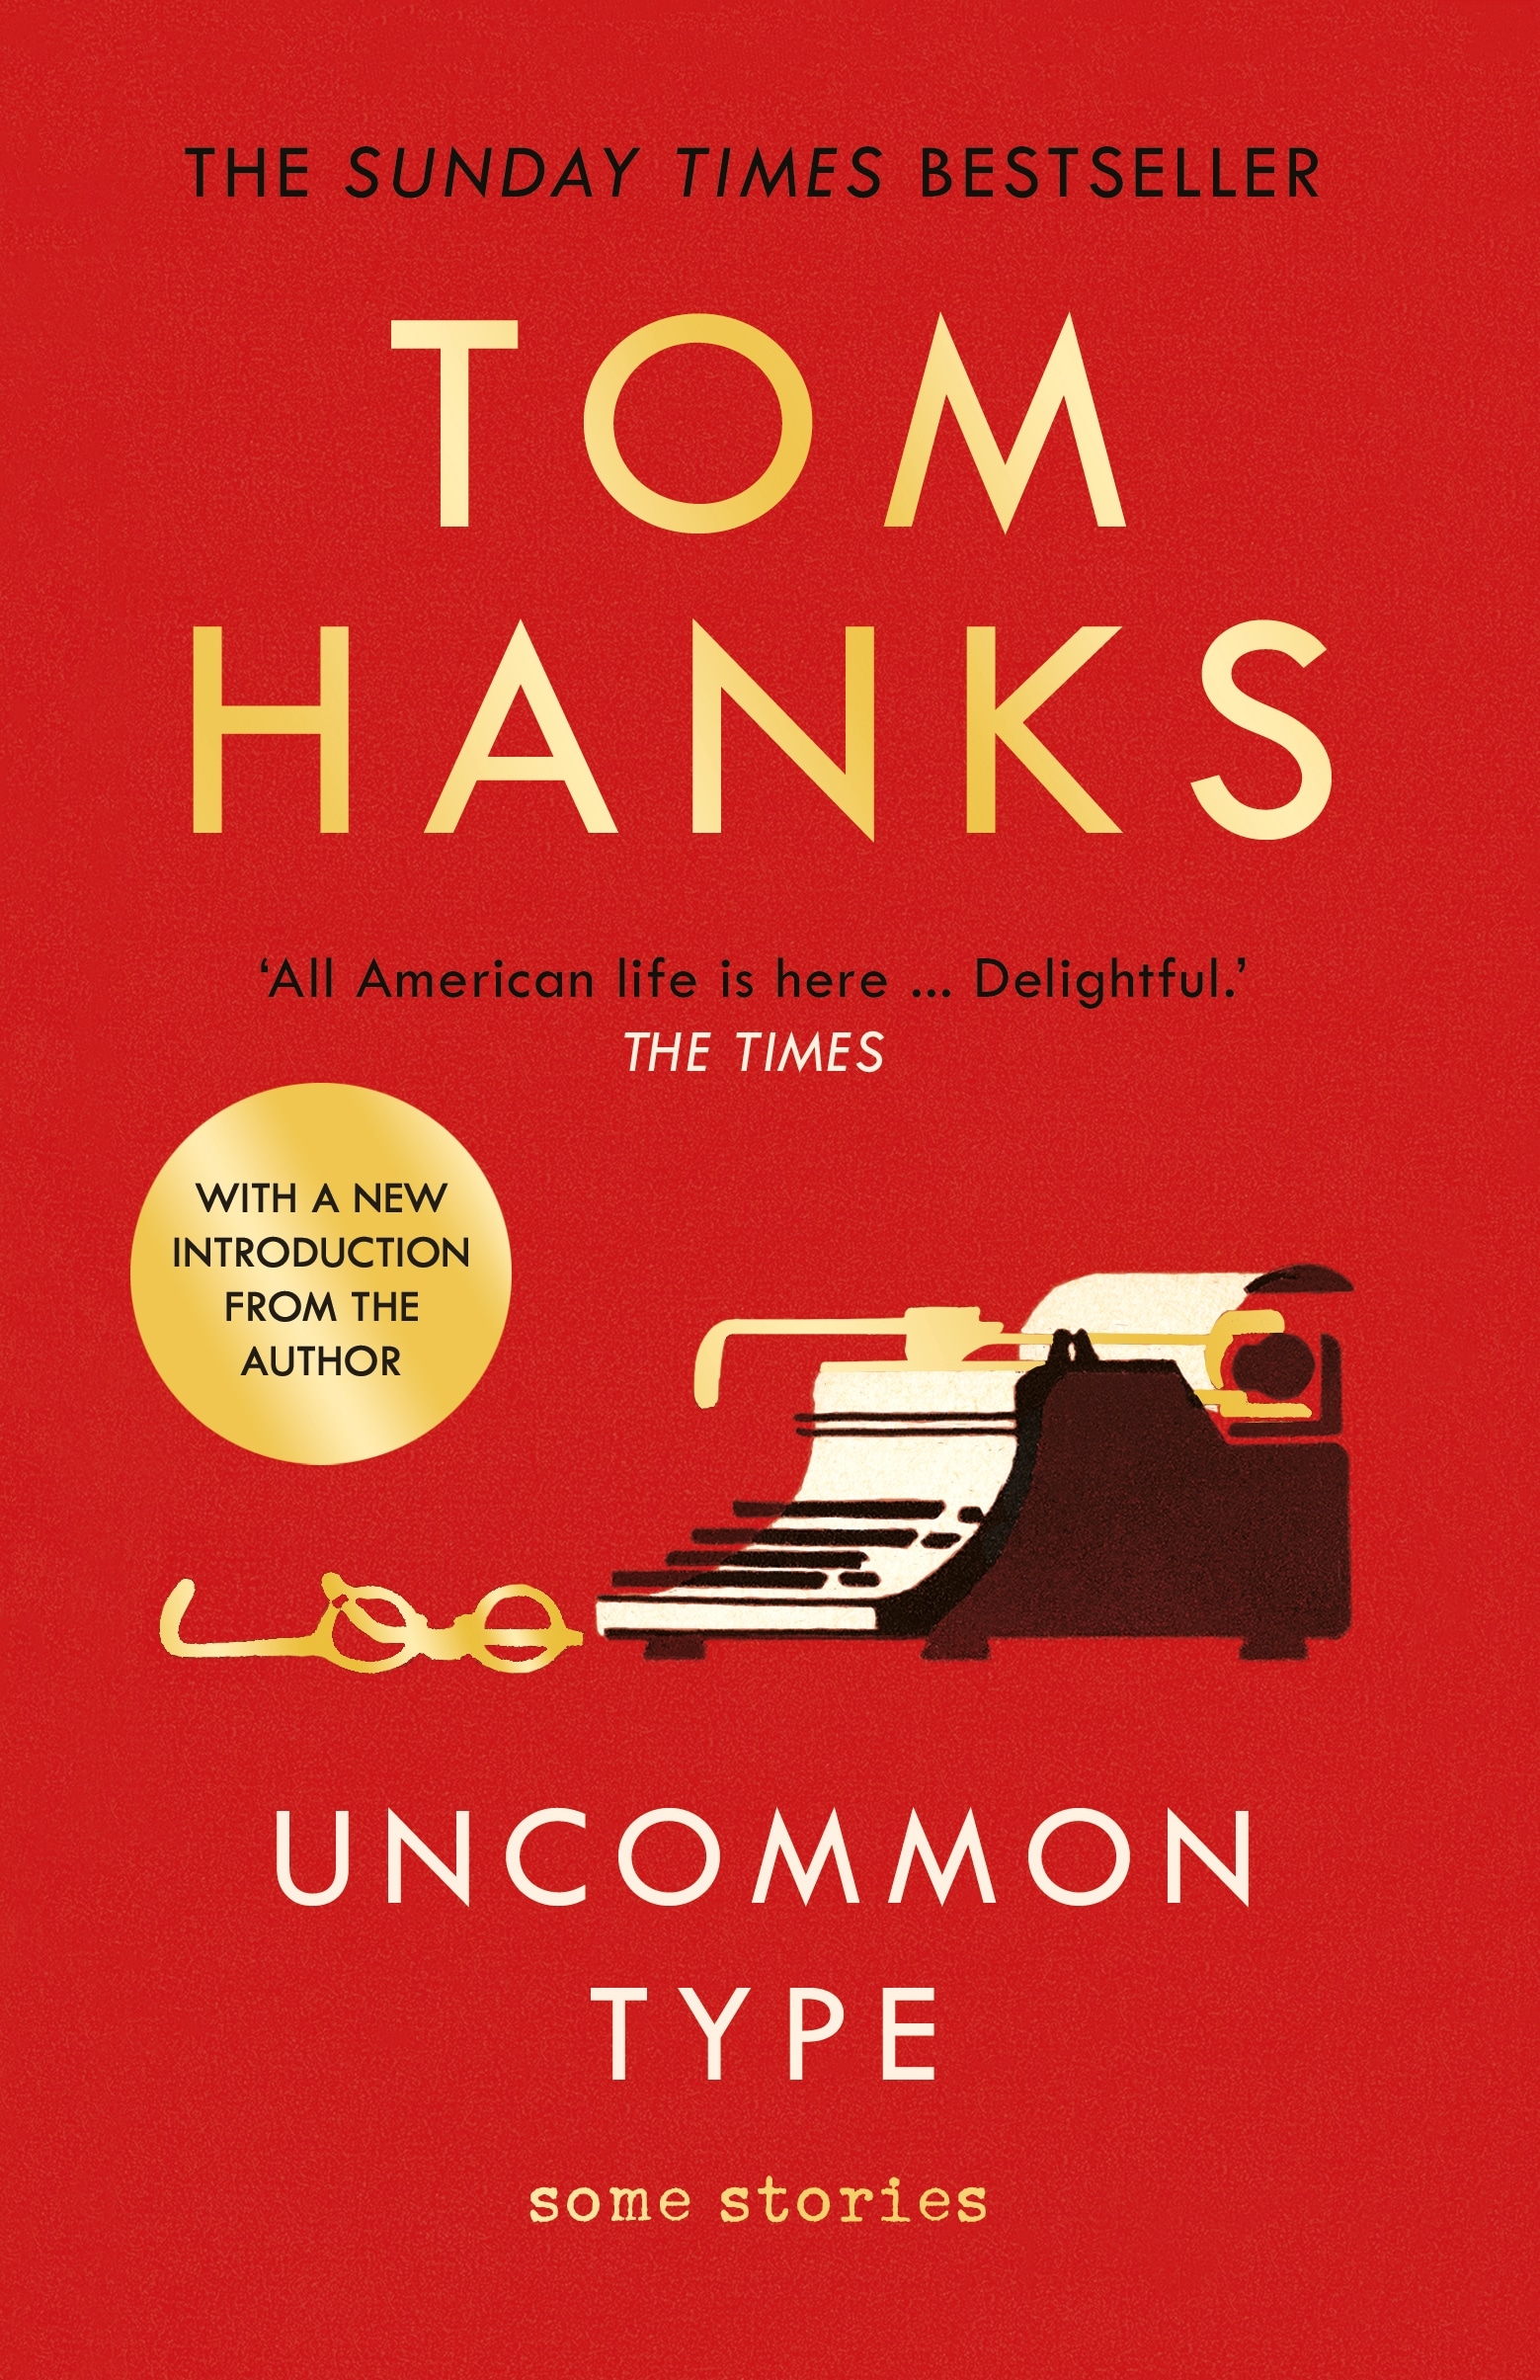 Book “Uncommon Type” by Tom Hanks — November 26, 2020